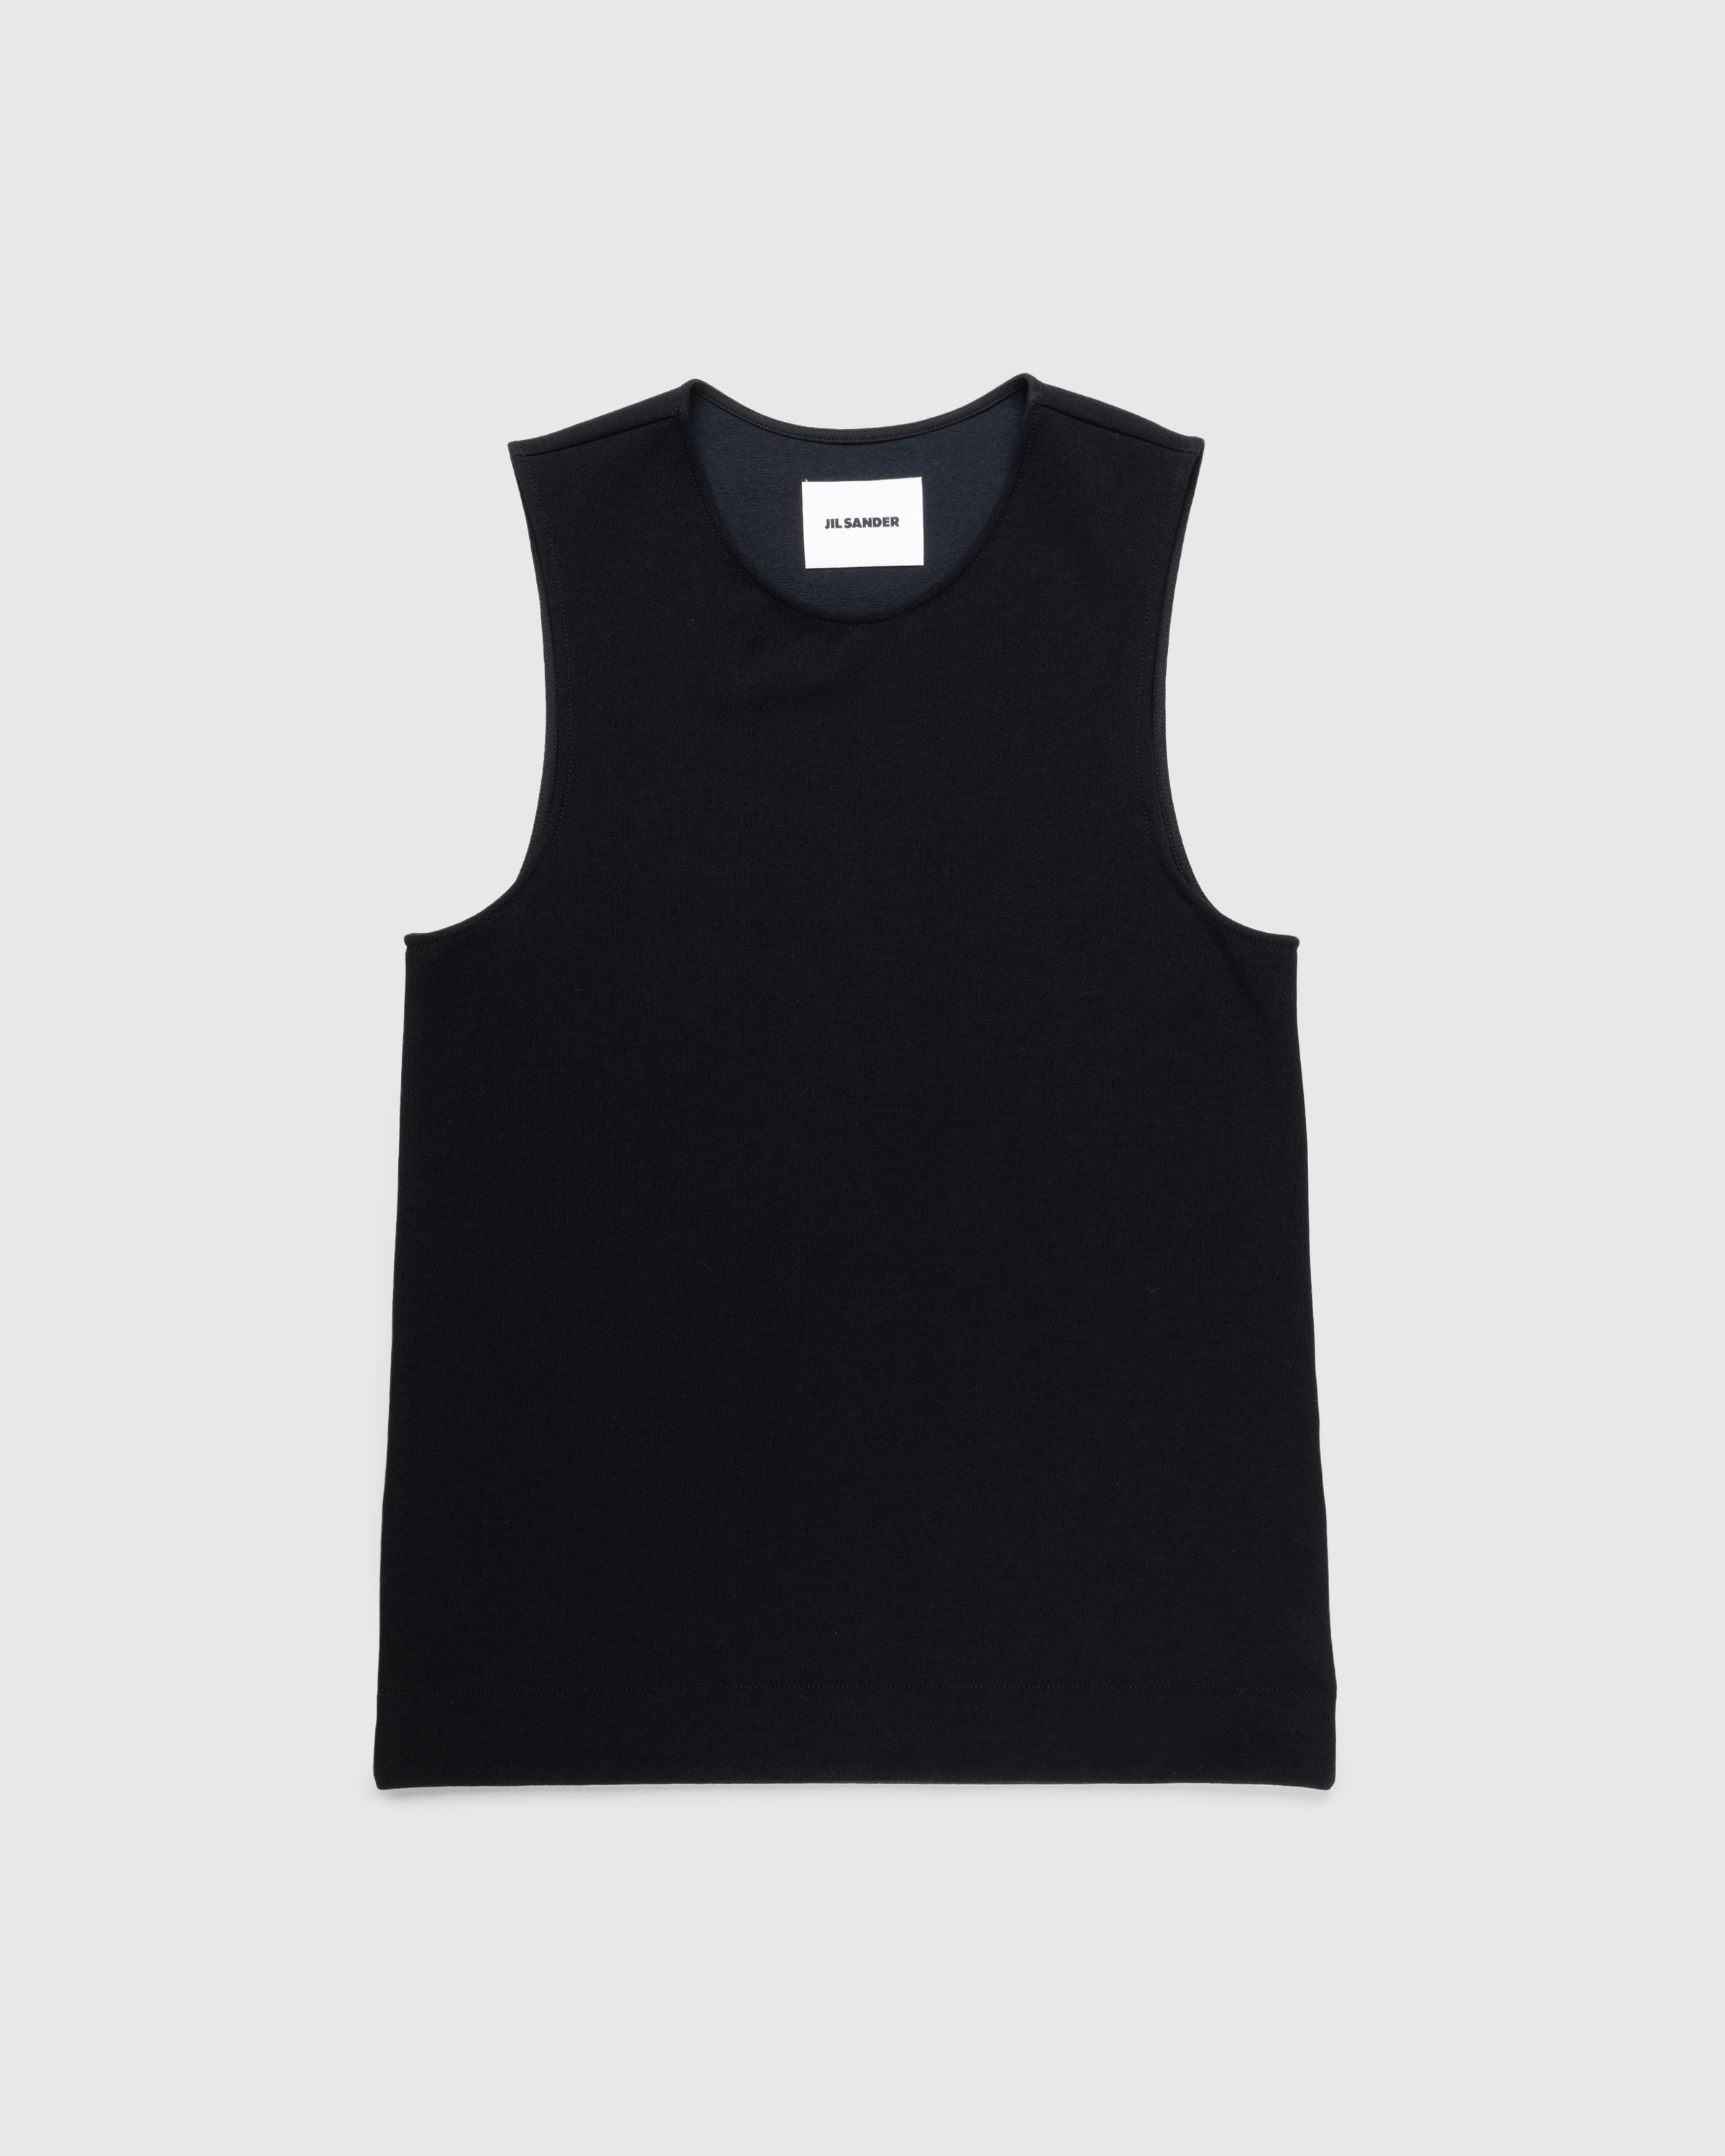 Jil Sander - Tank Top - Clothing - Black - Image 1